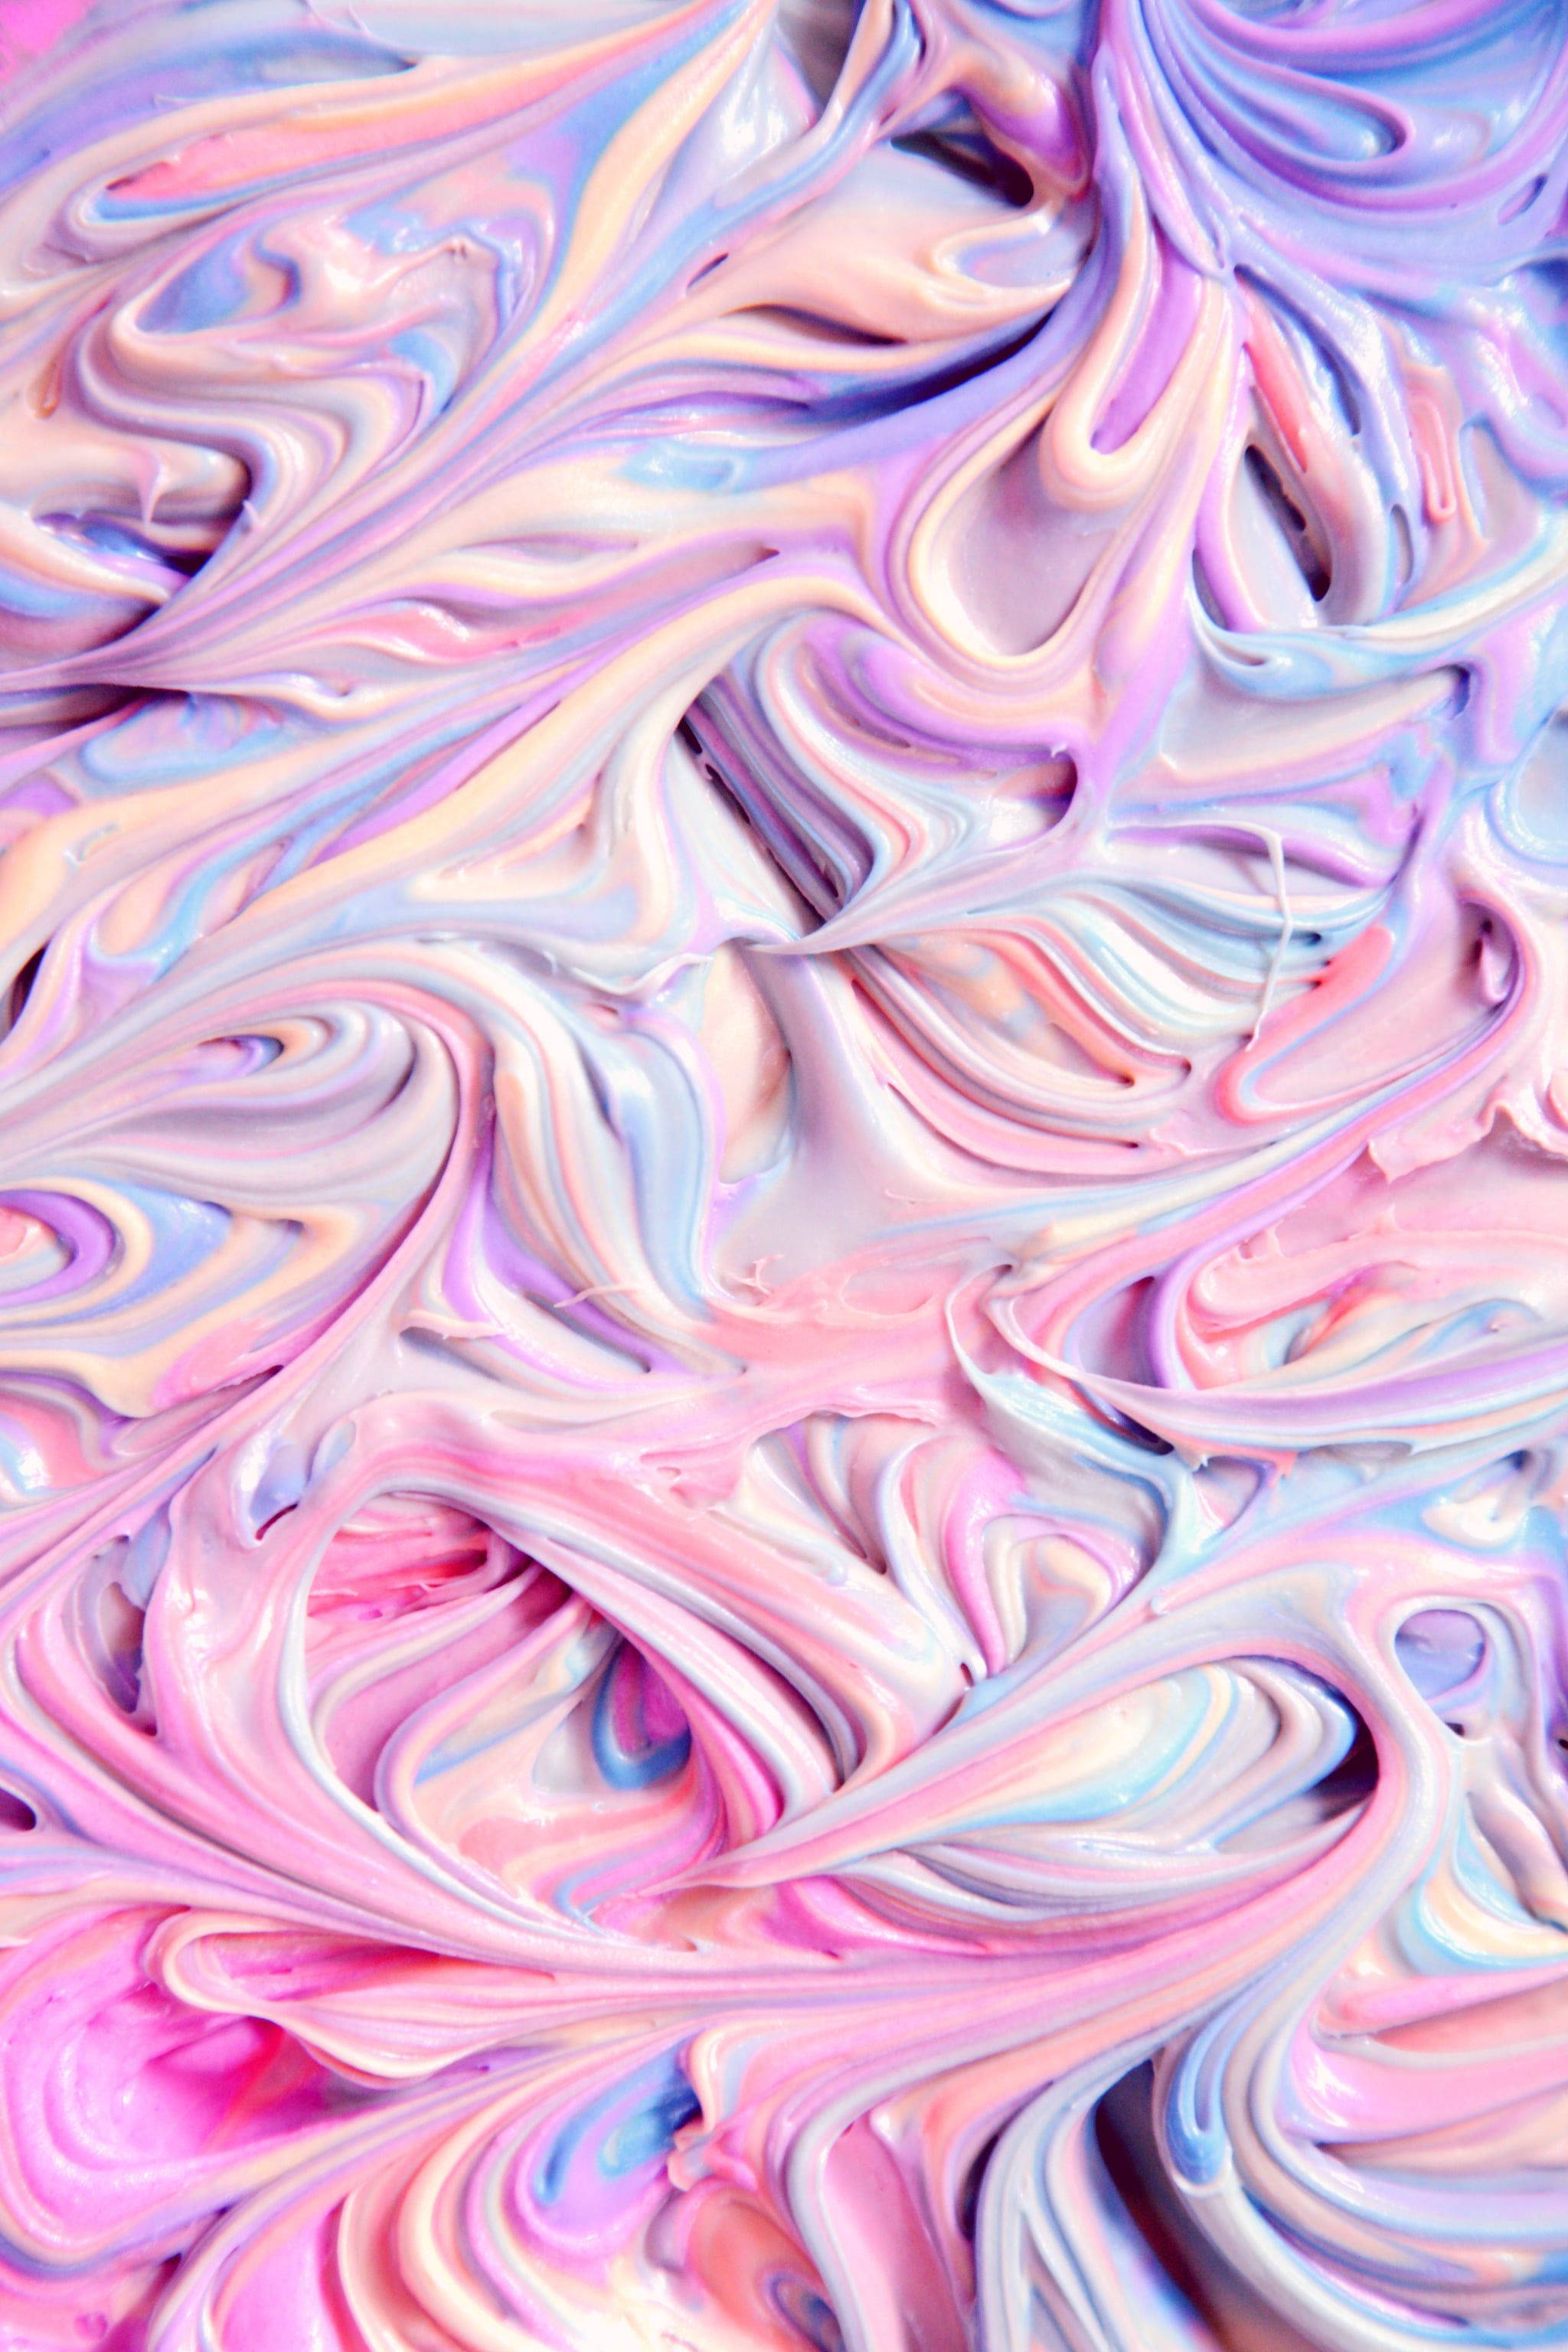 Download Light Purple Aesthetic Paint Swirly Patterns Wallpaper | Wallpapers .com